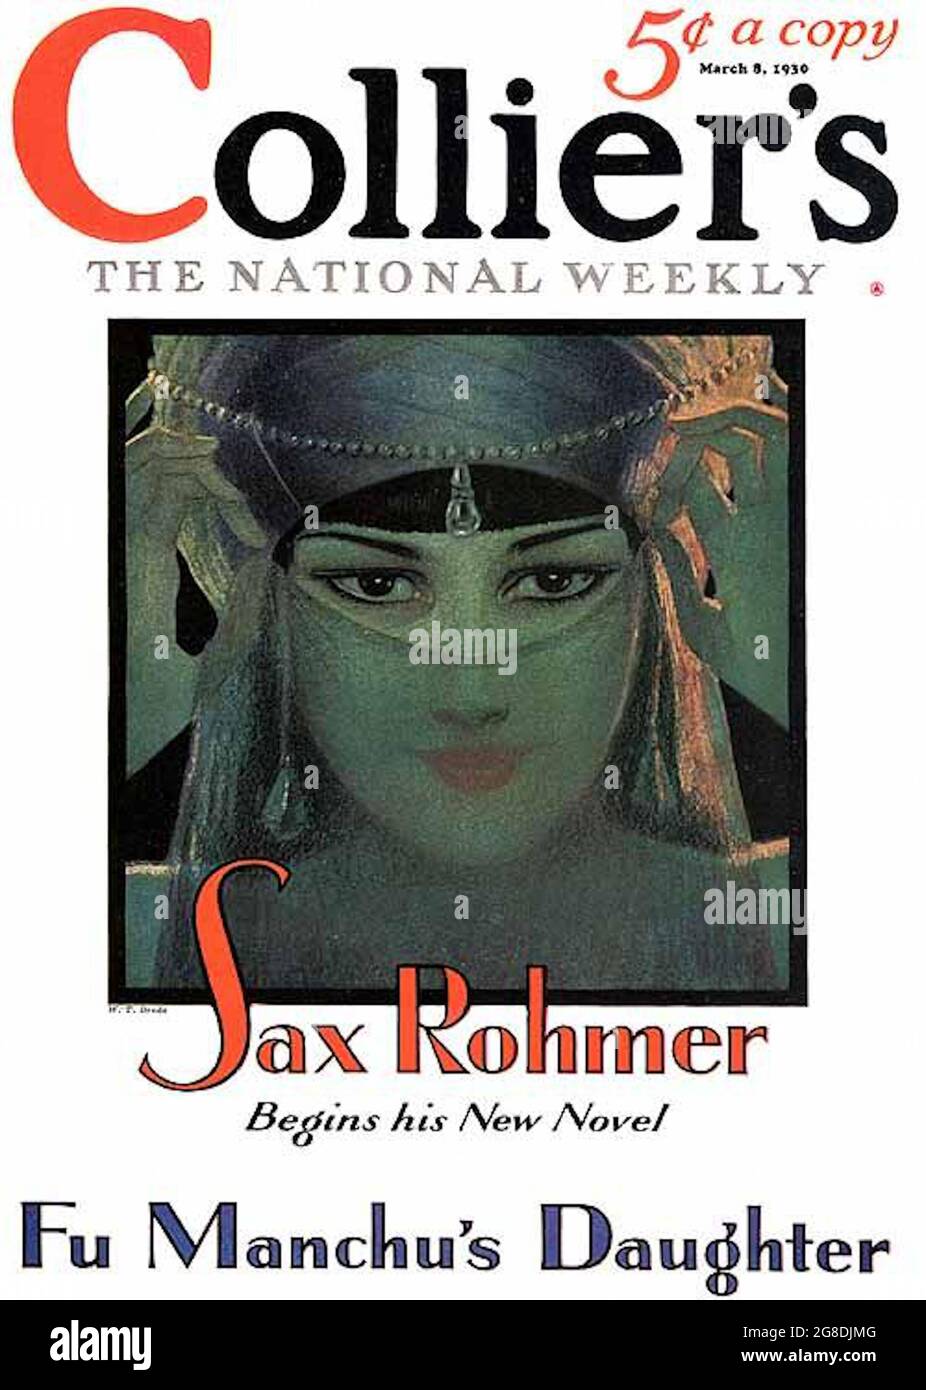 Władysław Teodor Benda Magazine cover design - Collier's The National Weekly - figlia di Sax Rohmer fu Manchu. Foto Stock